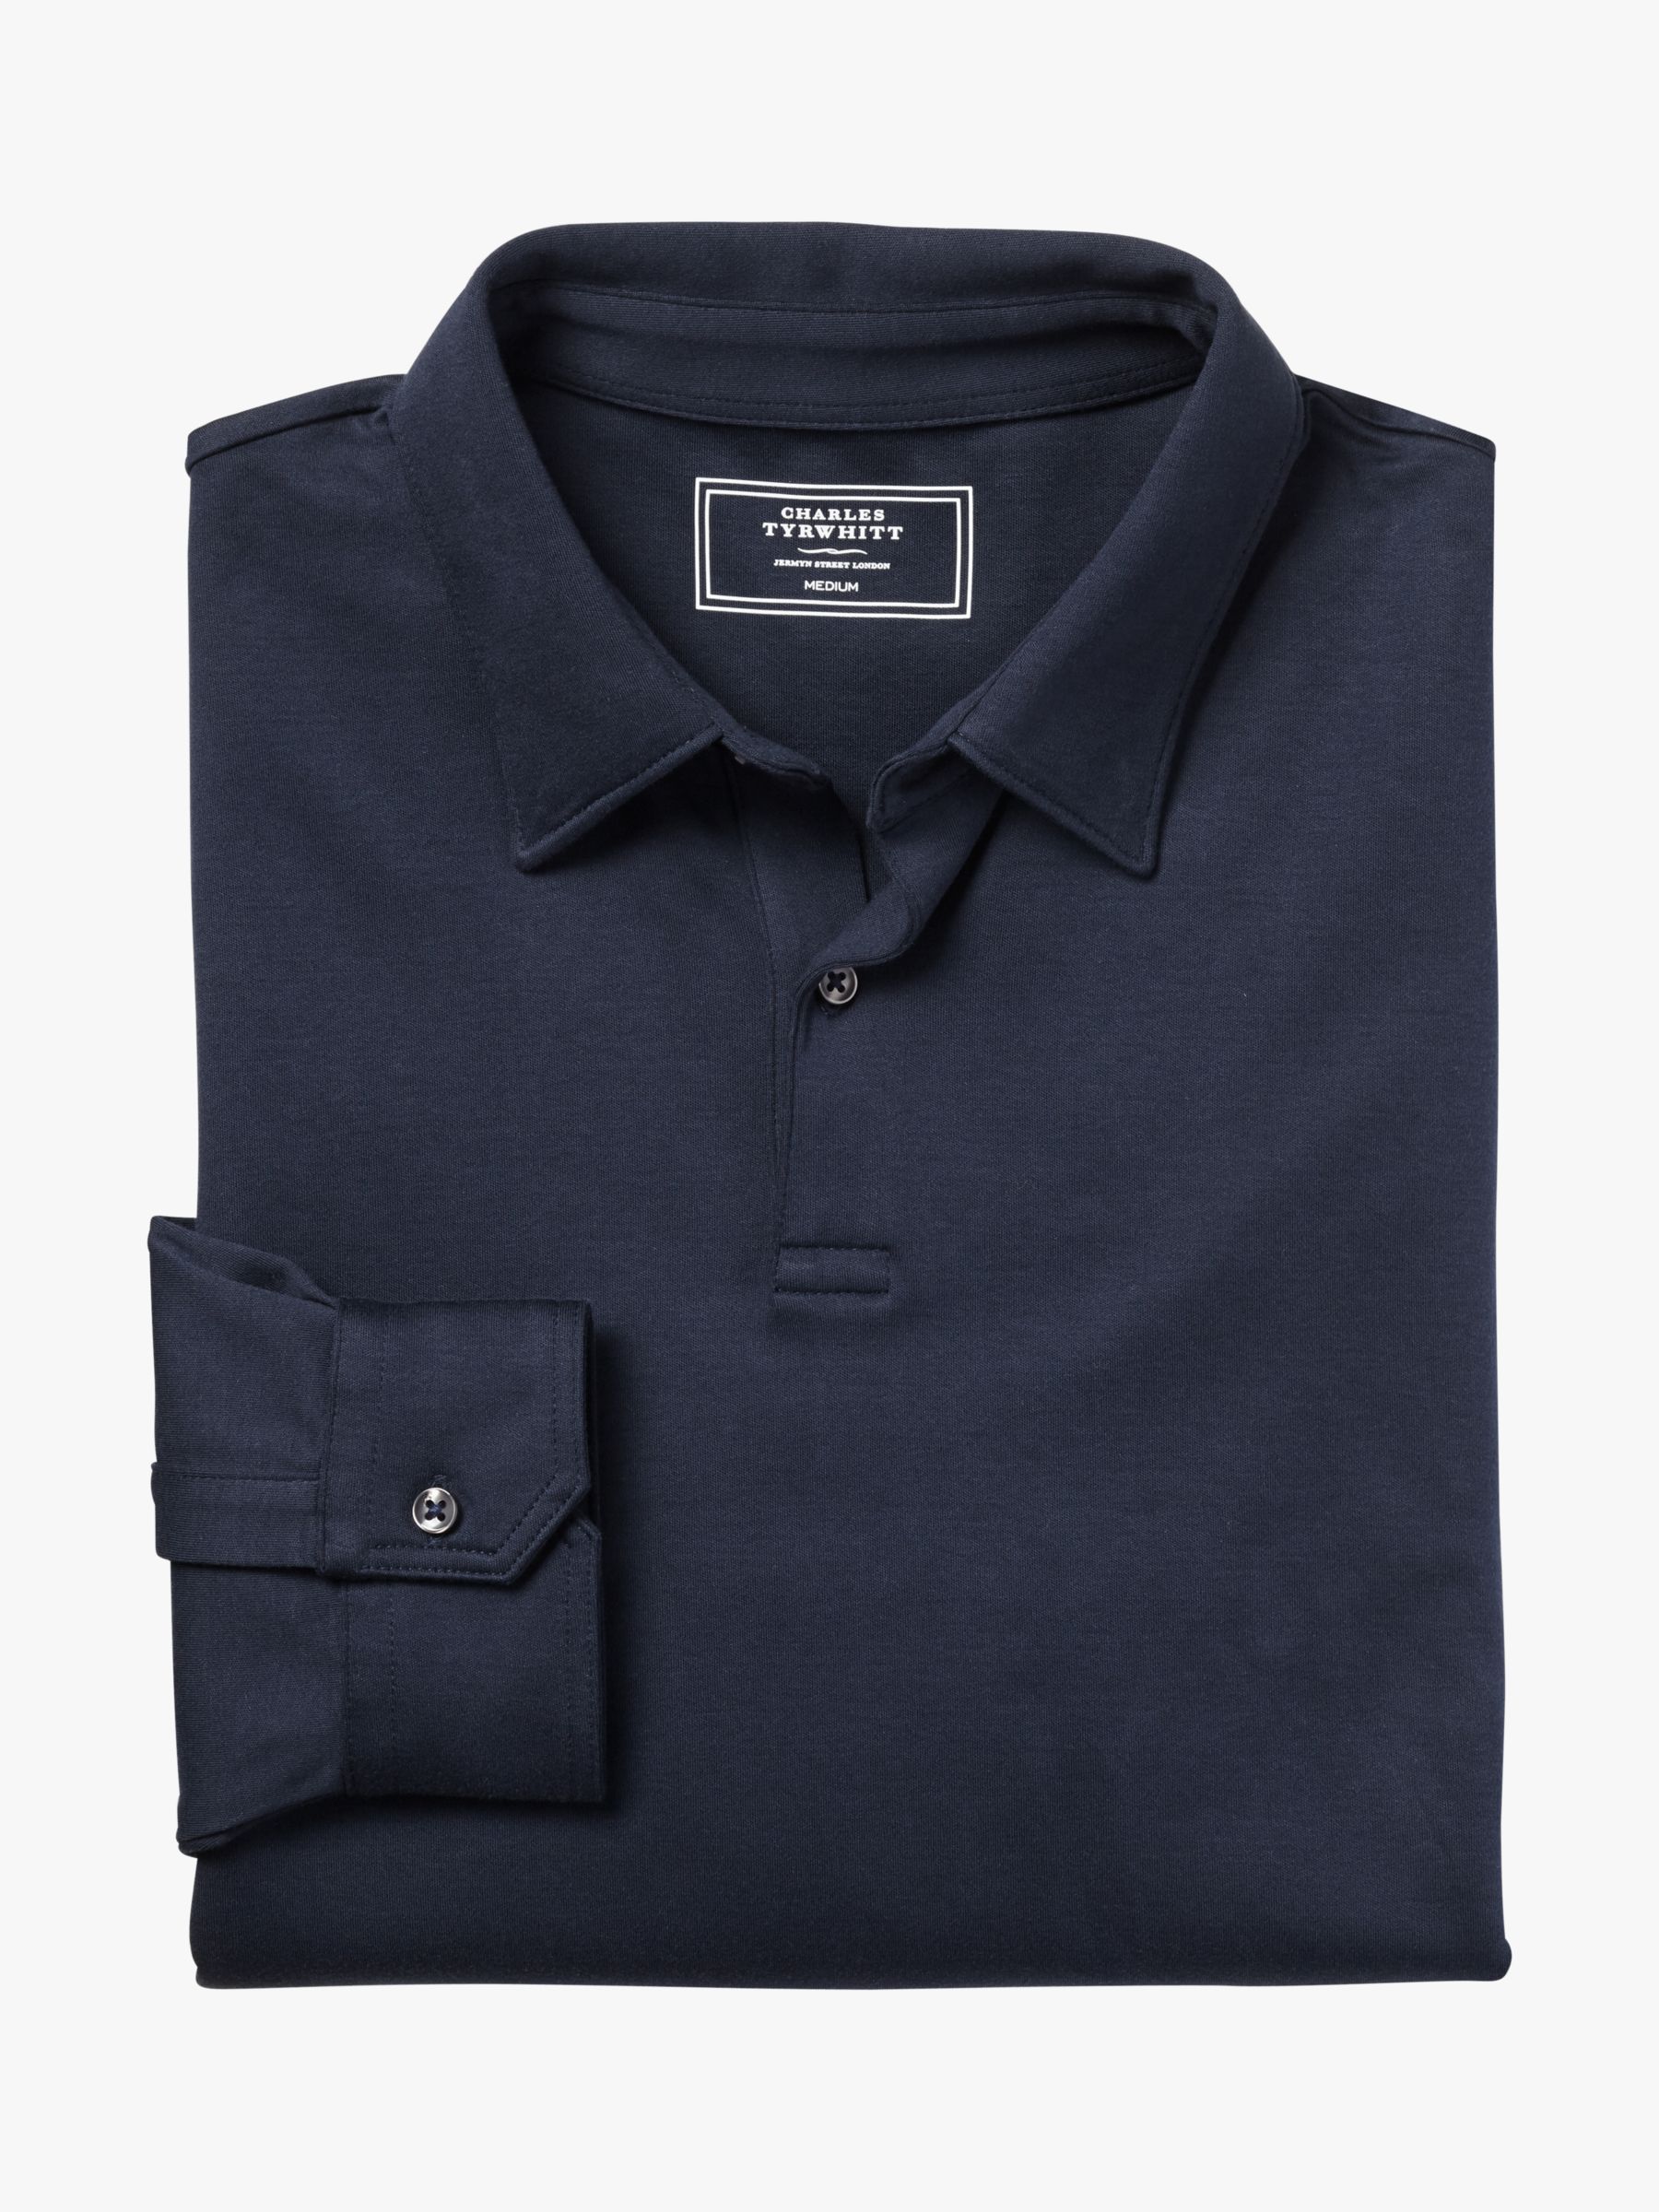 Charles Tyrwhitt Smart Long Sleeve Jersey Polo, Navy Blue, S